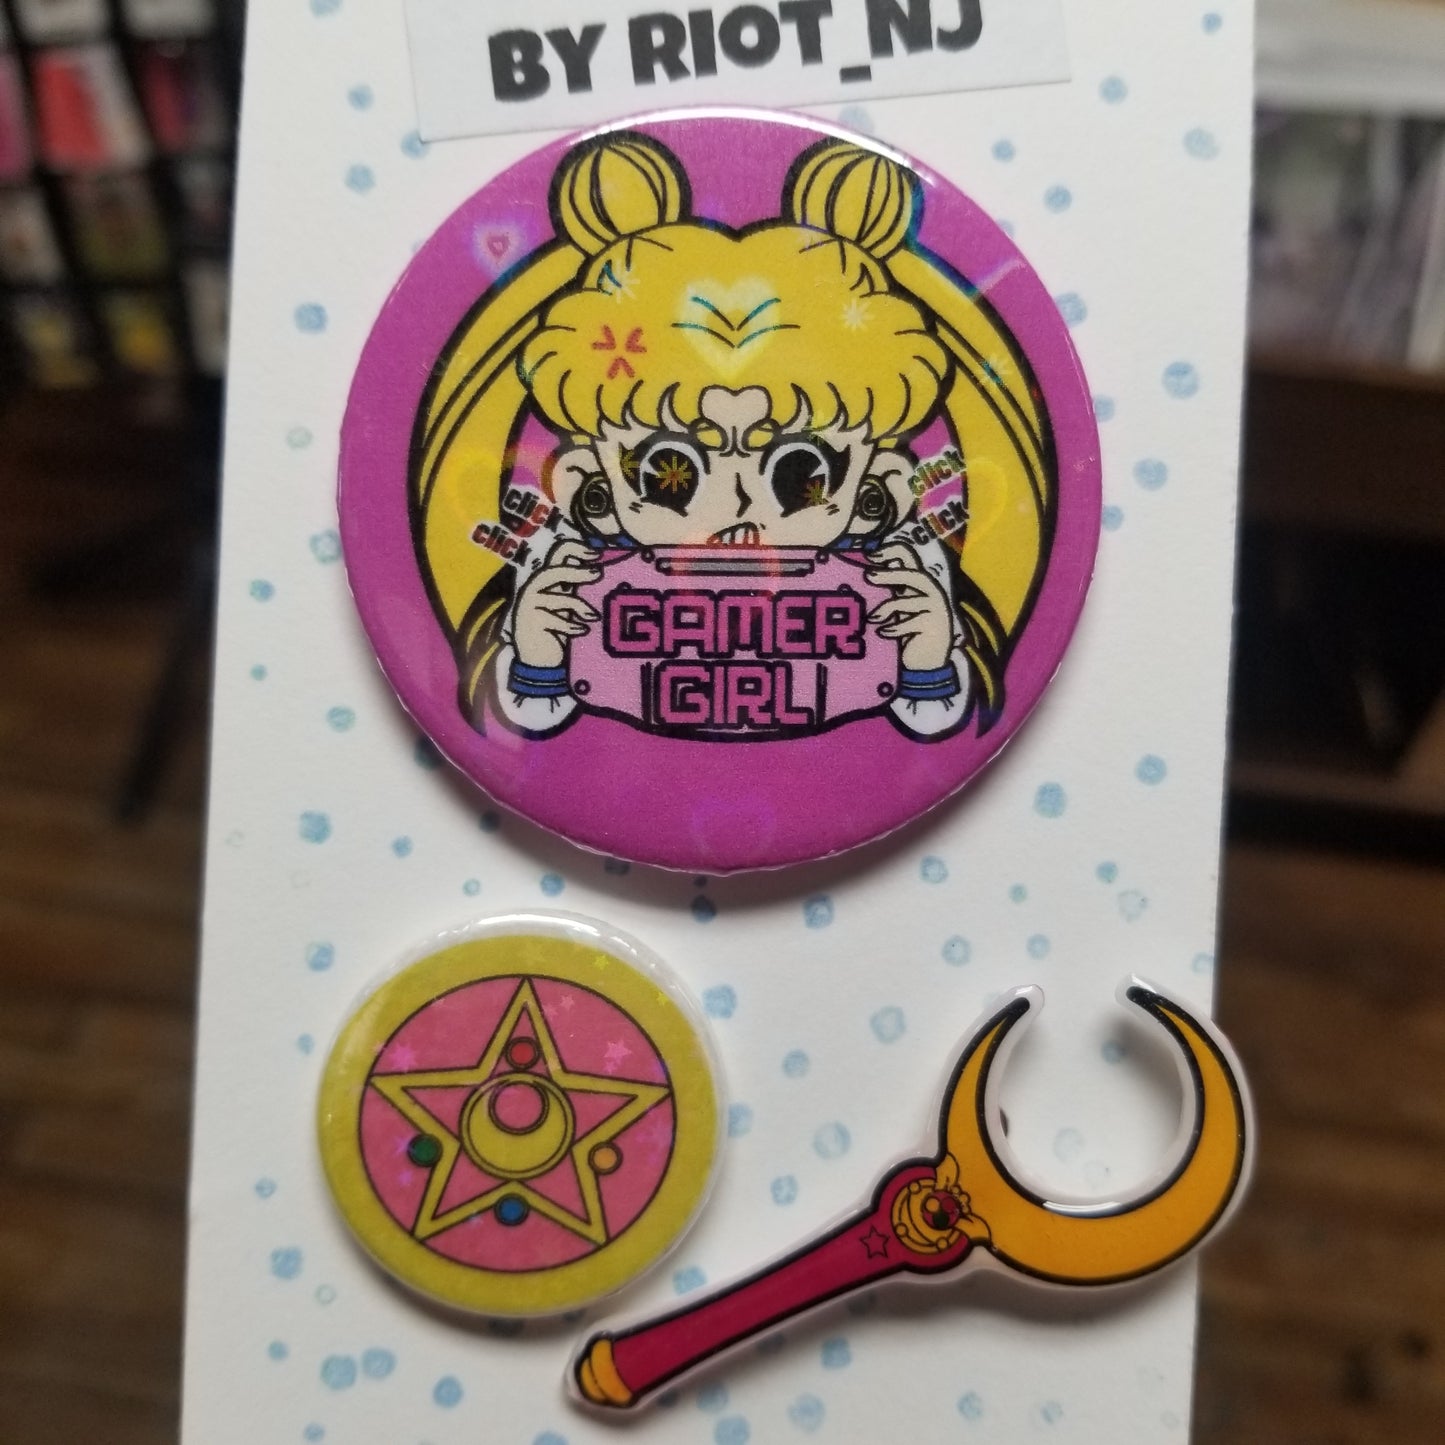 Gamer Girl / Sailor Wand/ Sailor Star PIN PACK by Riot NJ